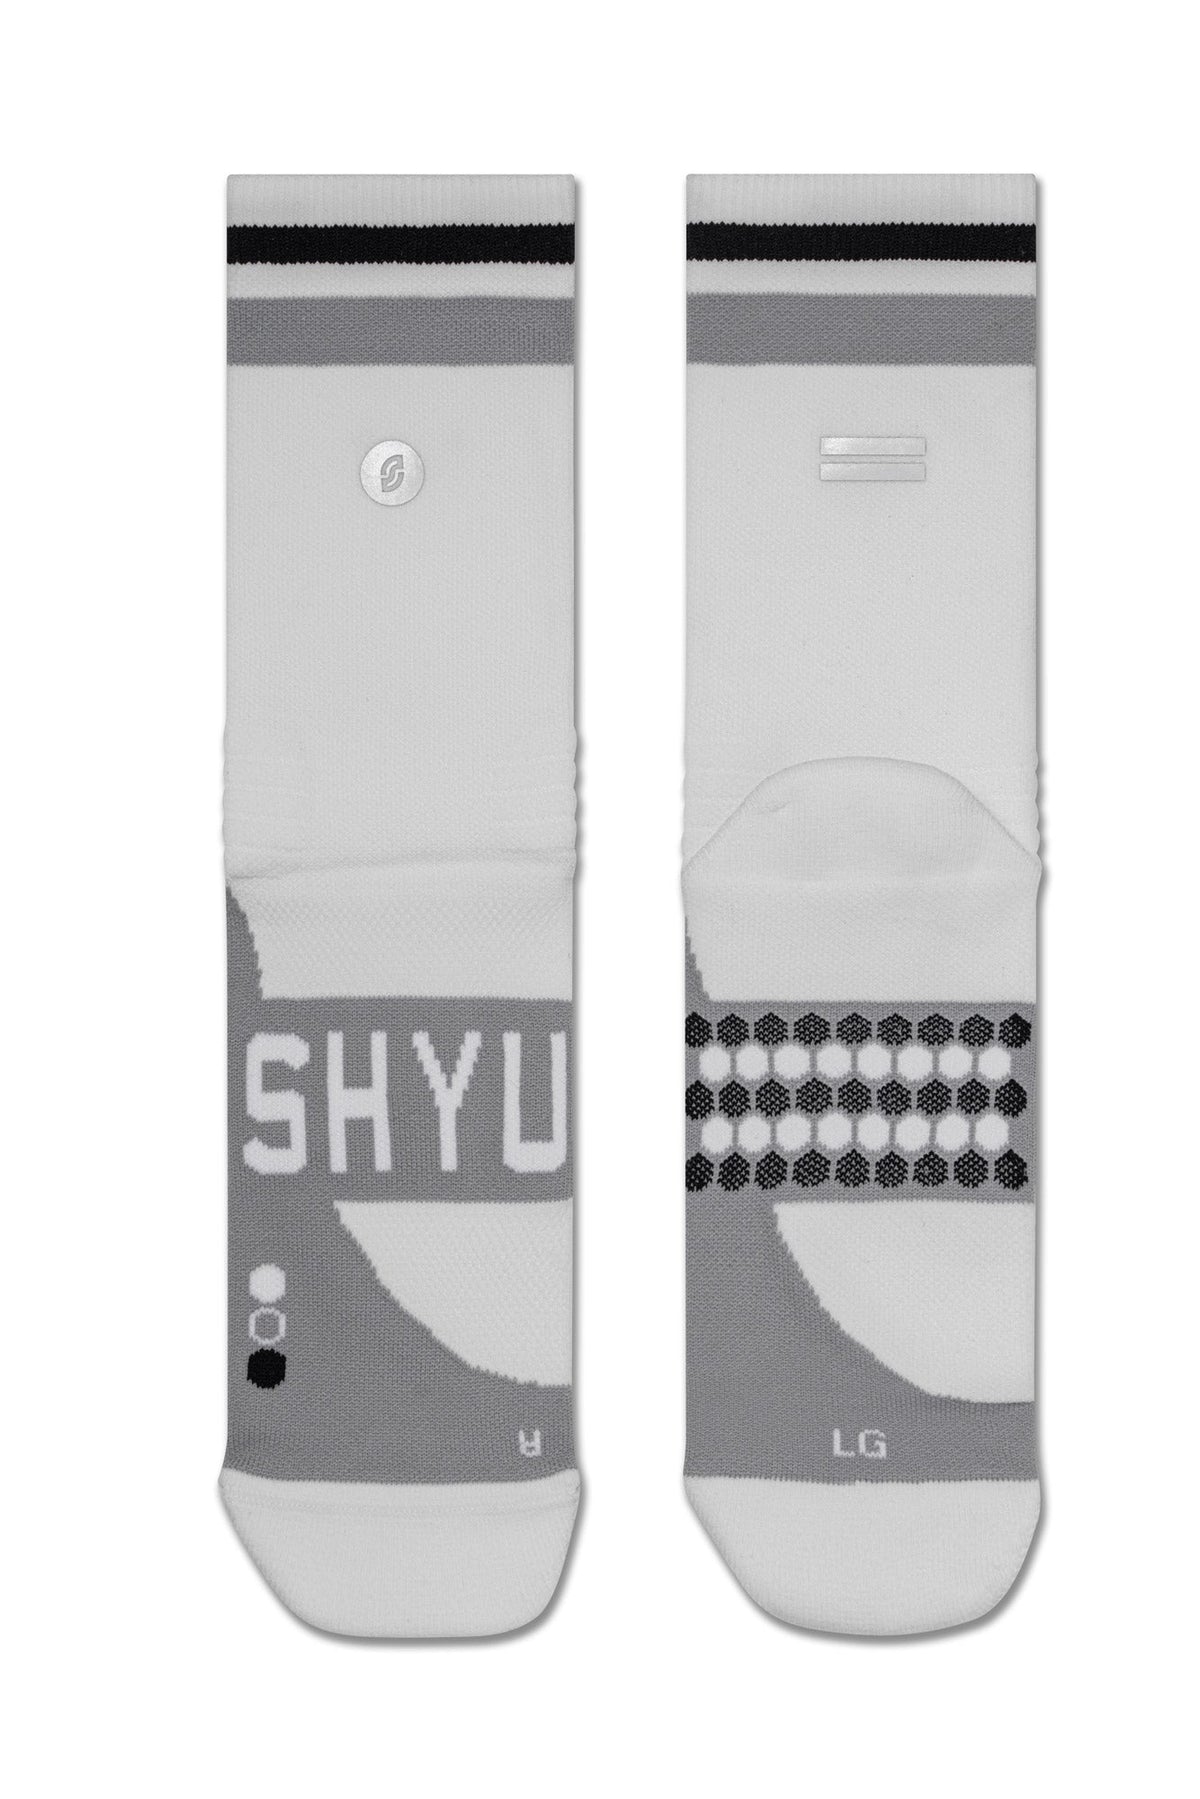 SHYU racing socks - white | grey | black (small sizes)